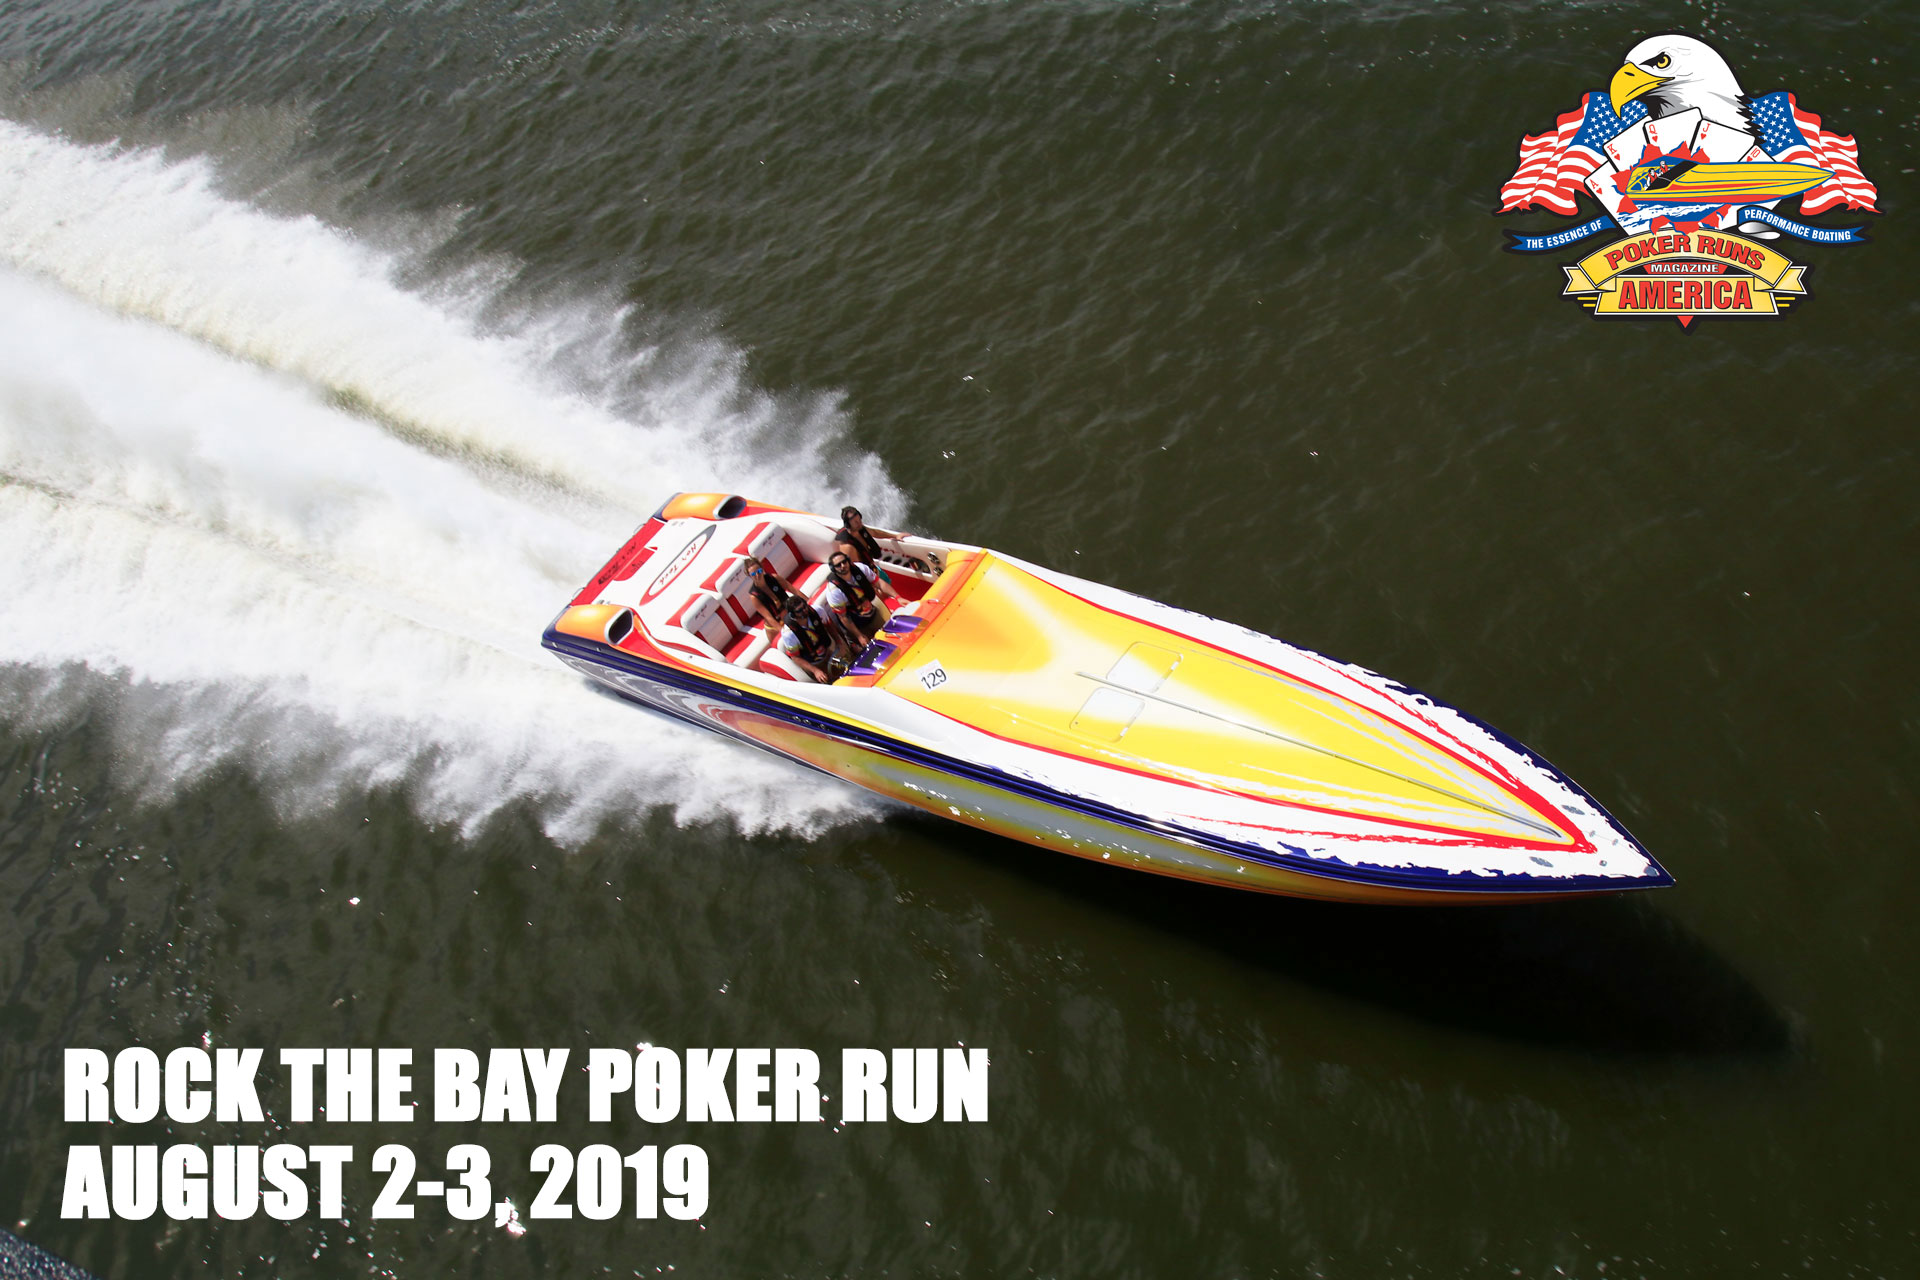 Discovery Bay Poker Run 2019